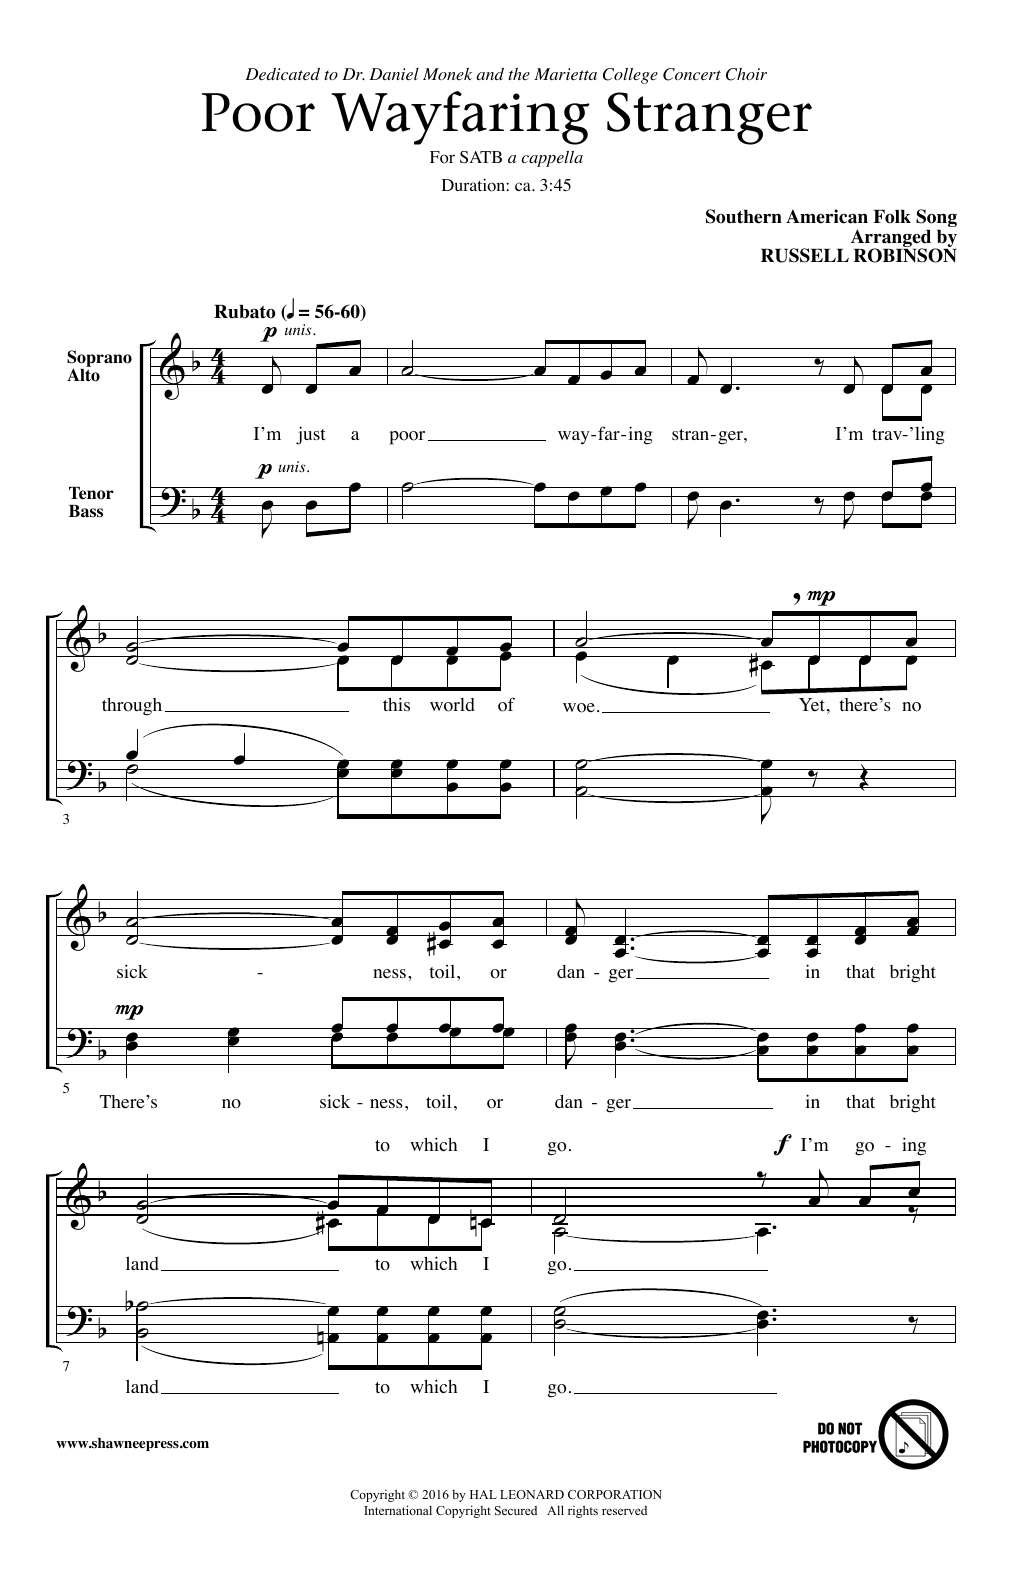 Russell Robinson Poor Wayfaring Stranger Sheet Music Notes & Chords for SATB - Download or Print PDF